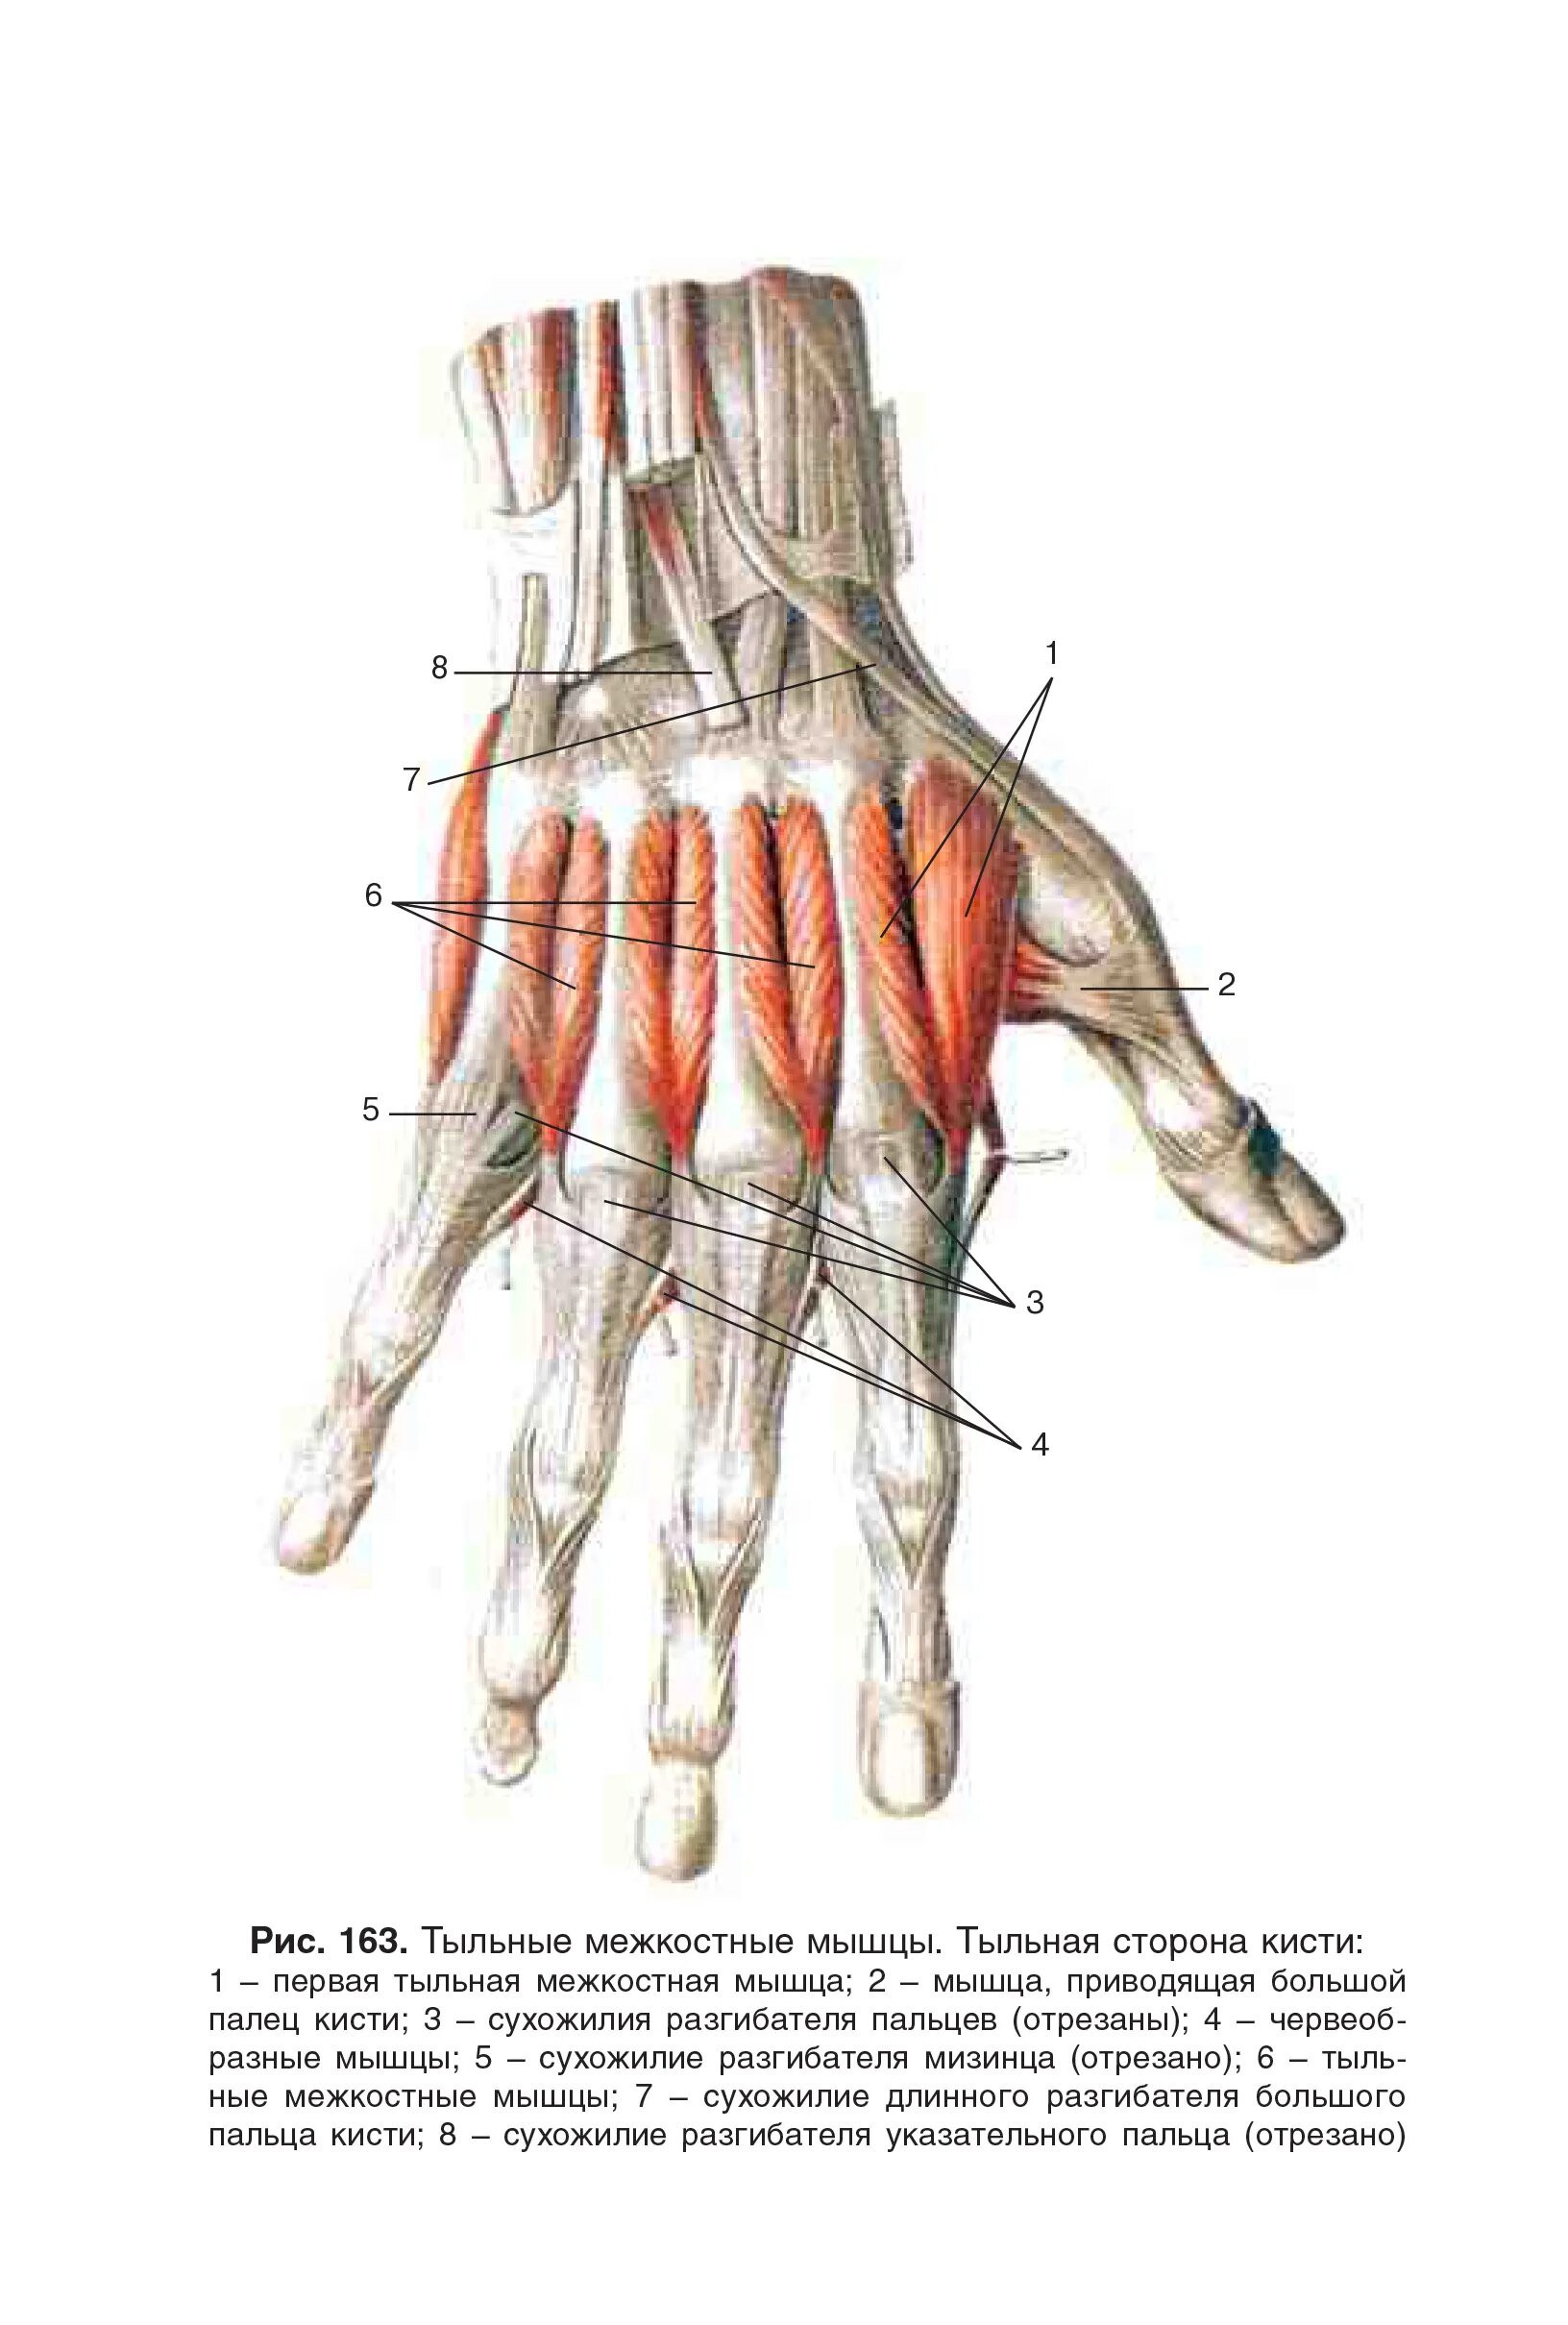 Дорсальные межкостные мышцы кисти. Ладонные межкостные мышцы кисти. Тыльные межкостные мышцы. Тыльные межкостные мышцы (musculi interossei dorsales).